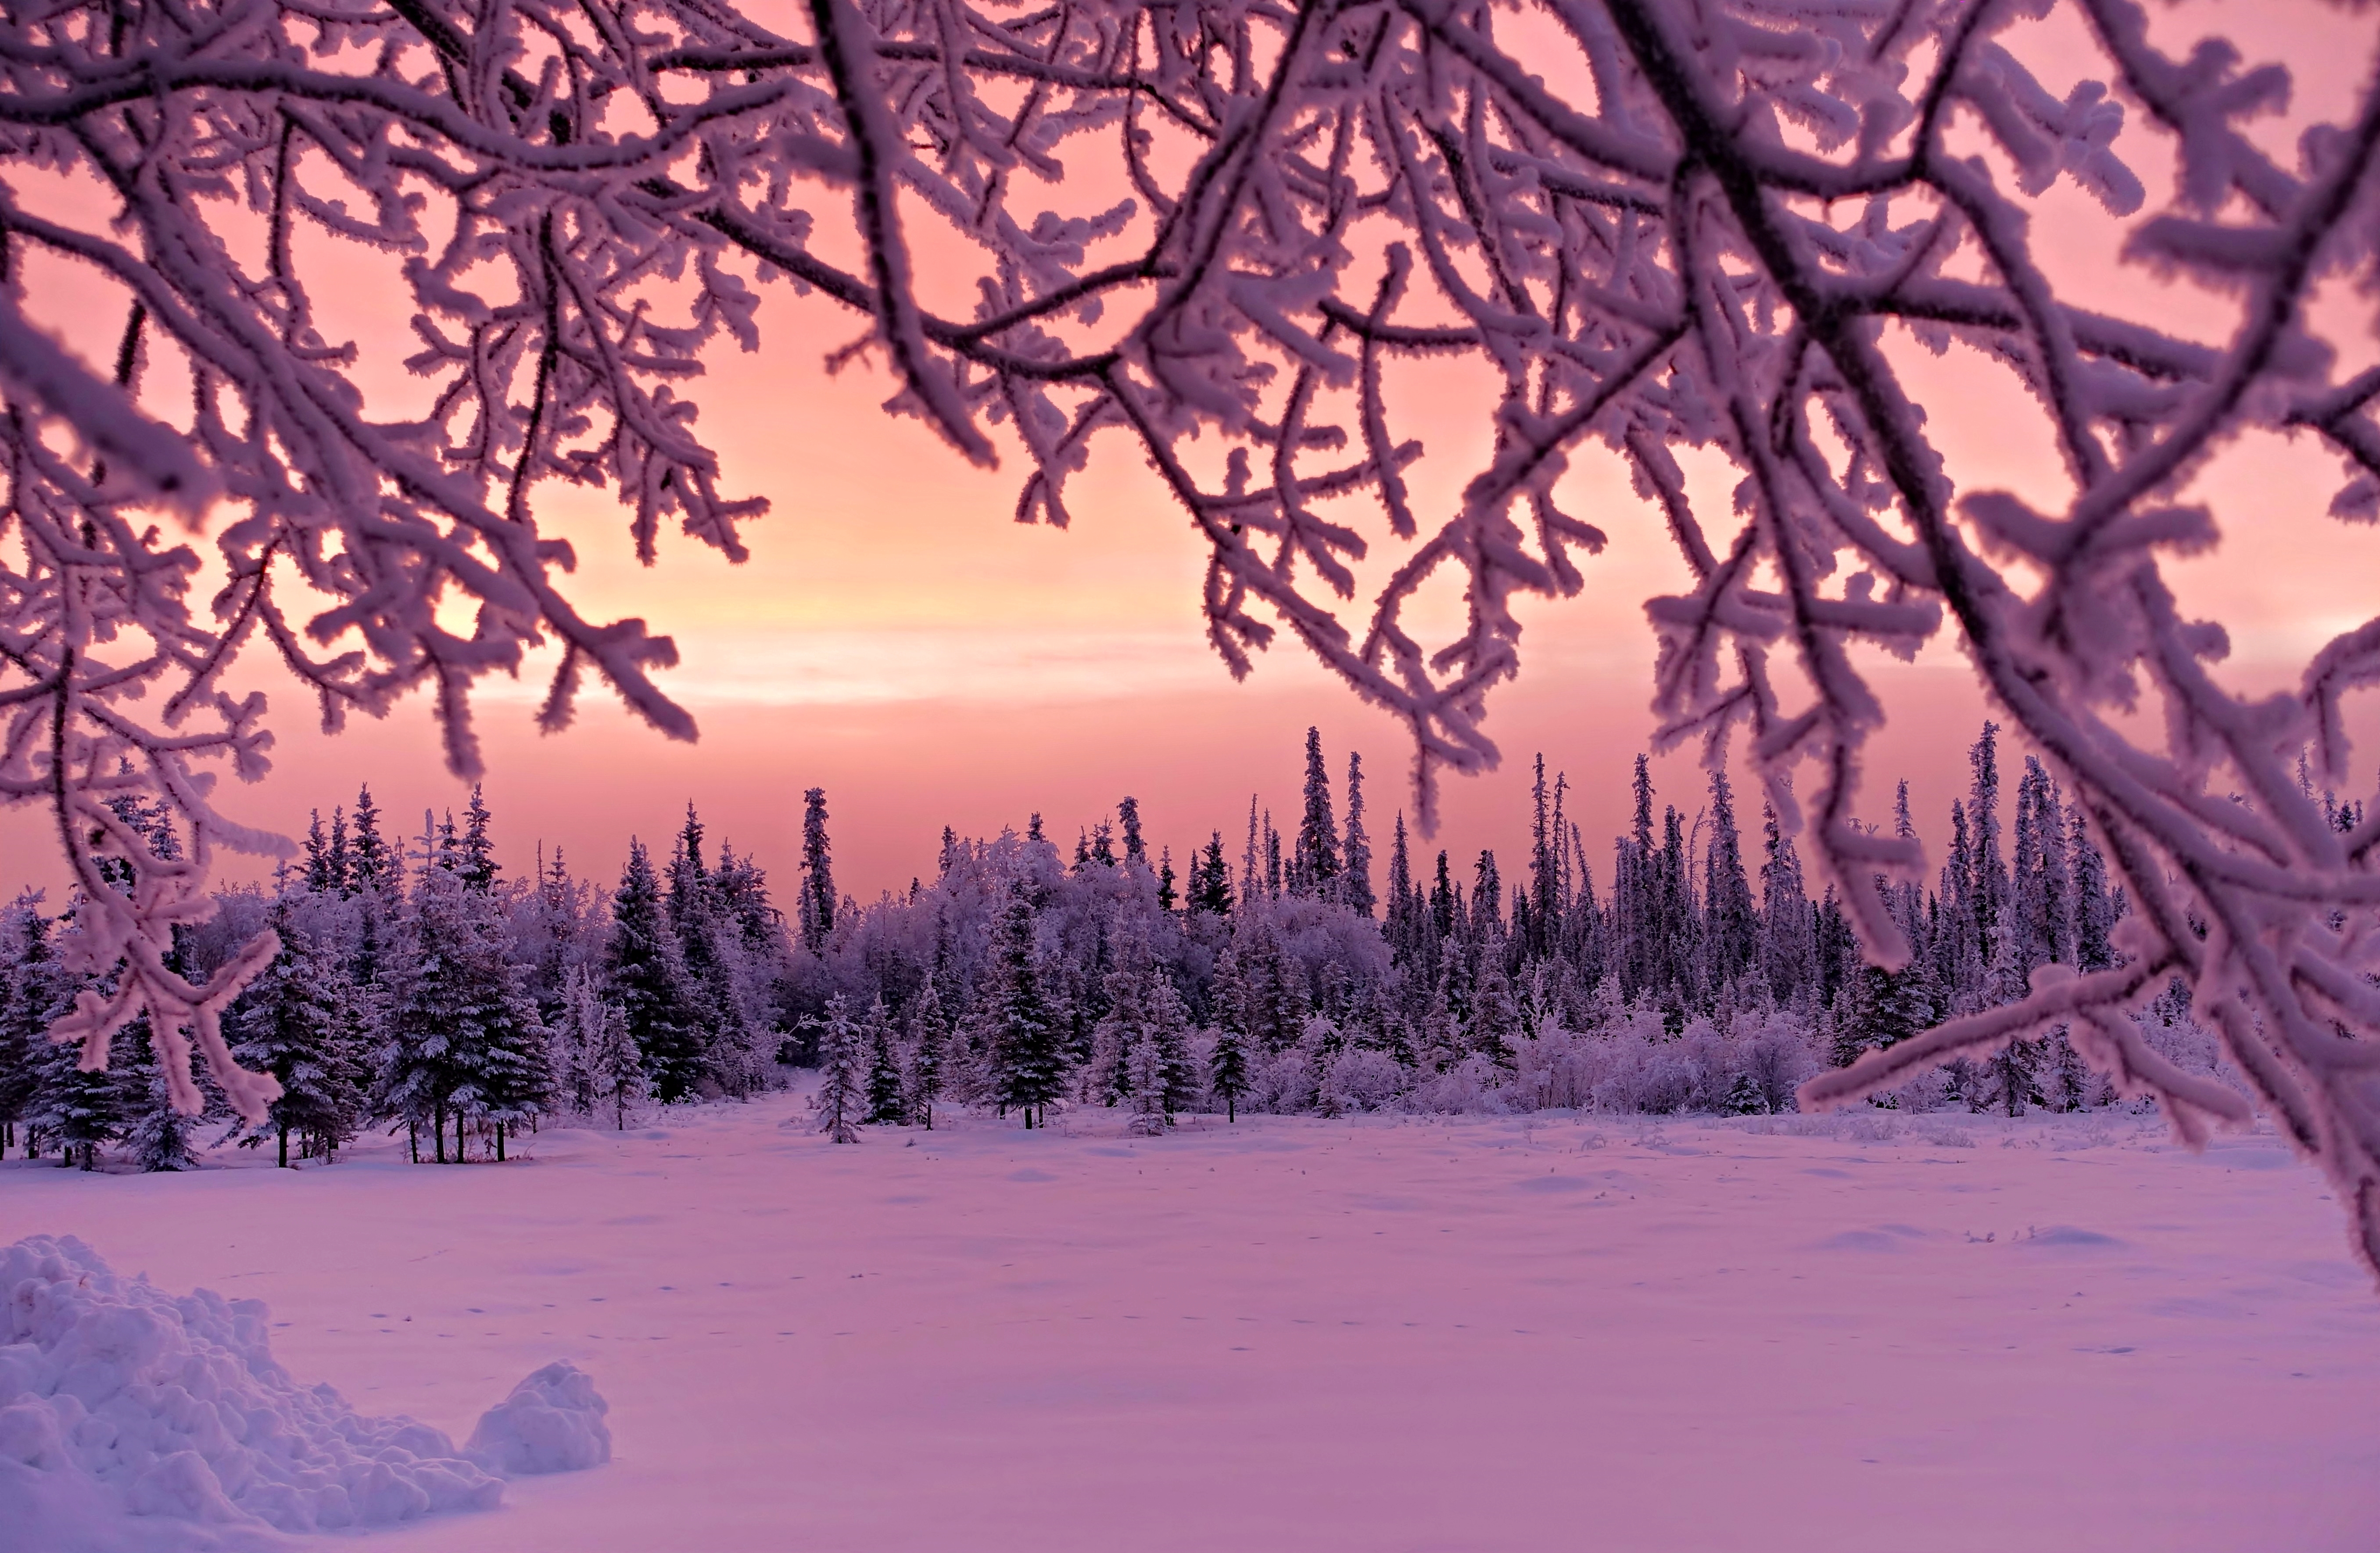 Winter Sunset 4k Ultra HD Wallpaper Background Image